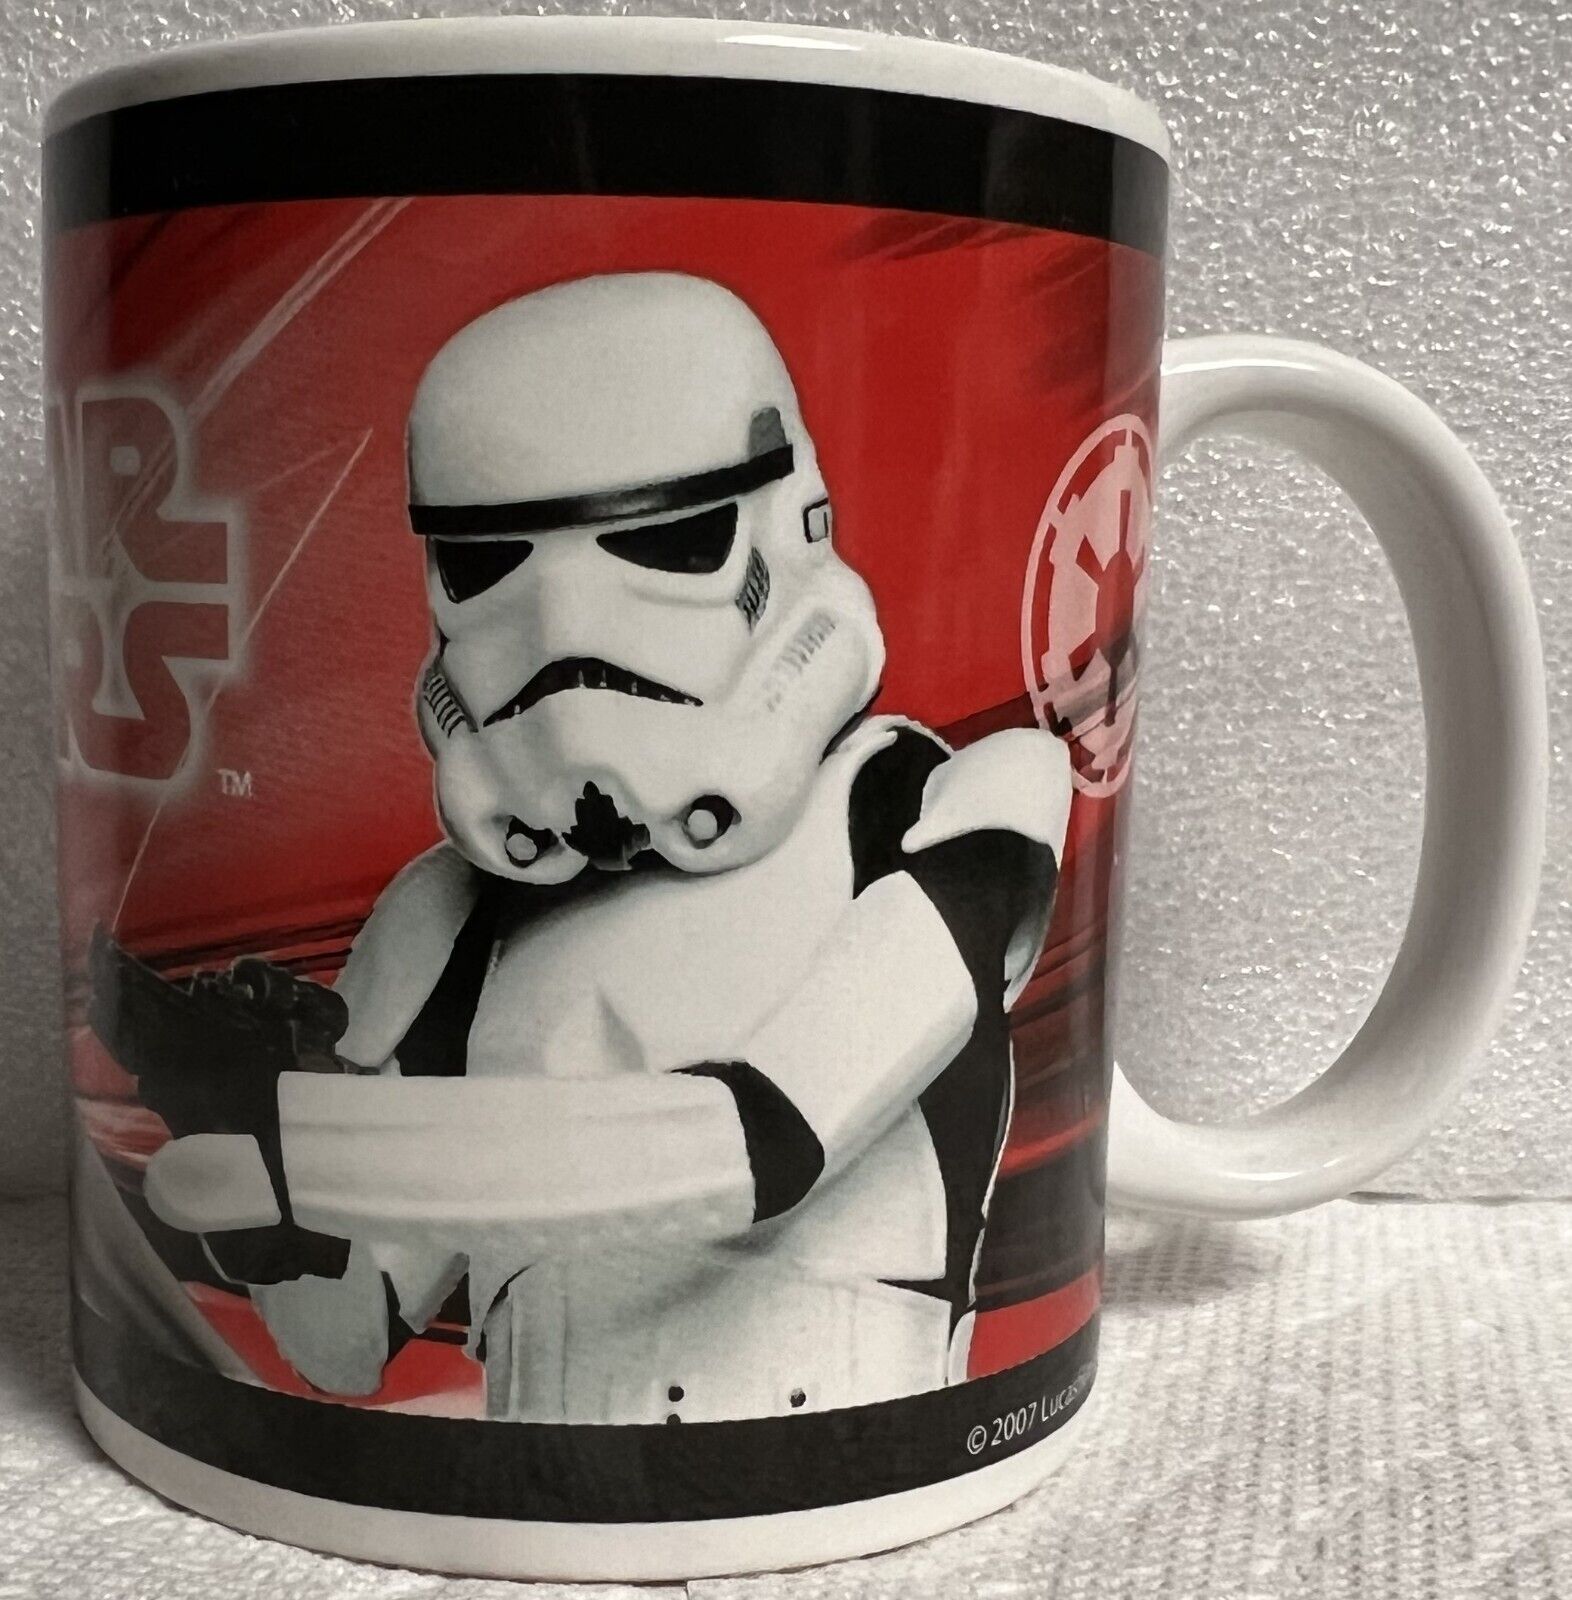 STAR WARS Darth Vader & Stormtrooper 2007 Lucasfilm Galerie 12 0z coffee cup mug